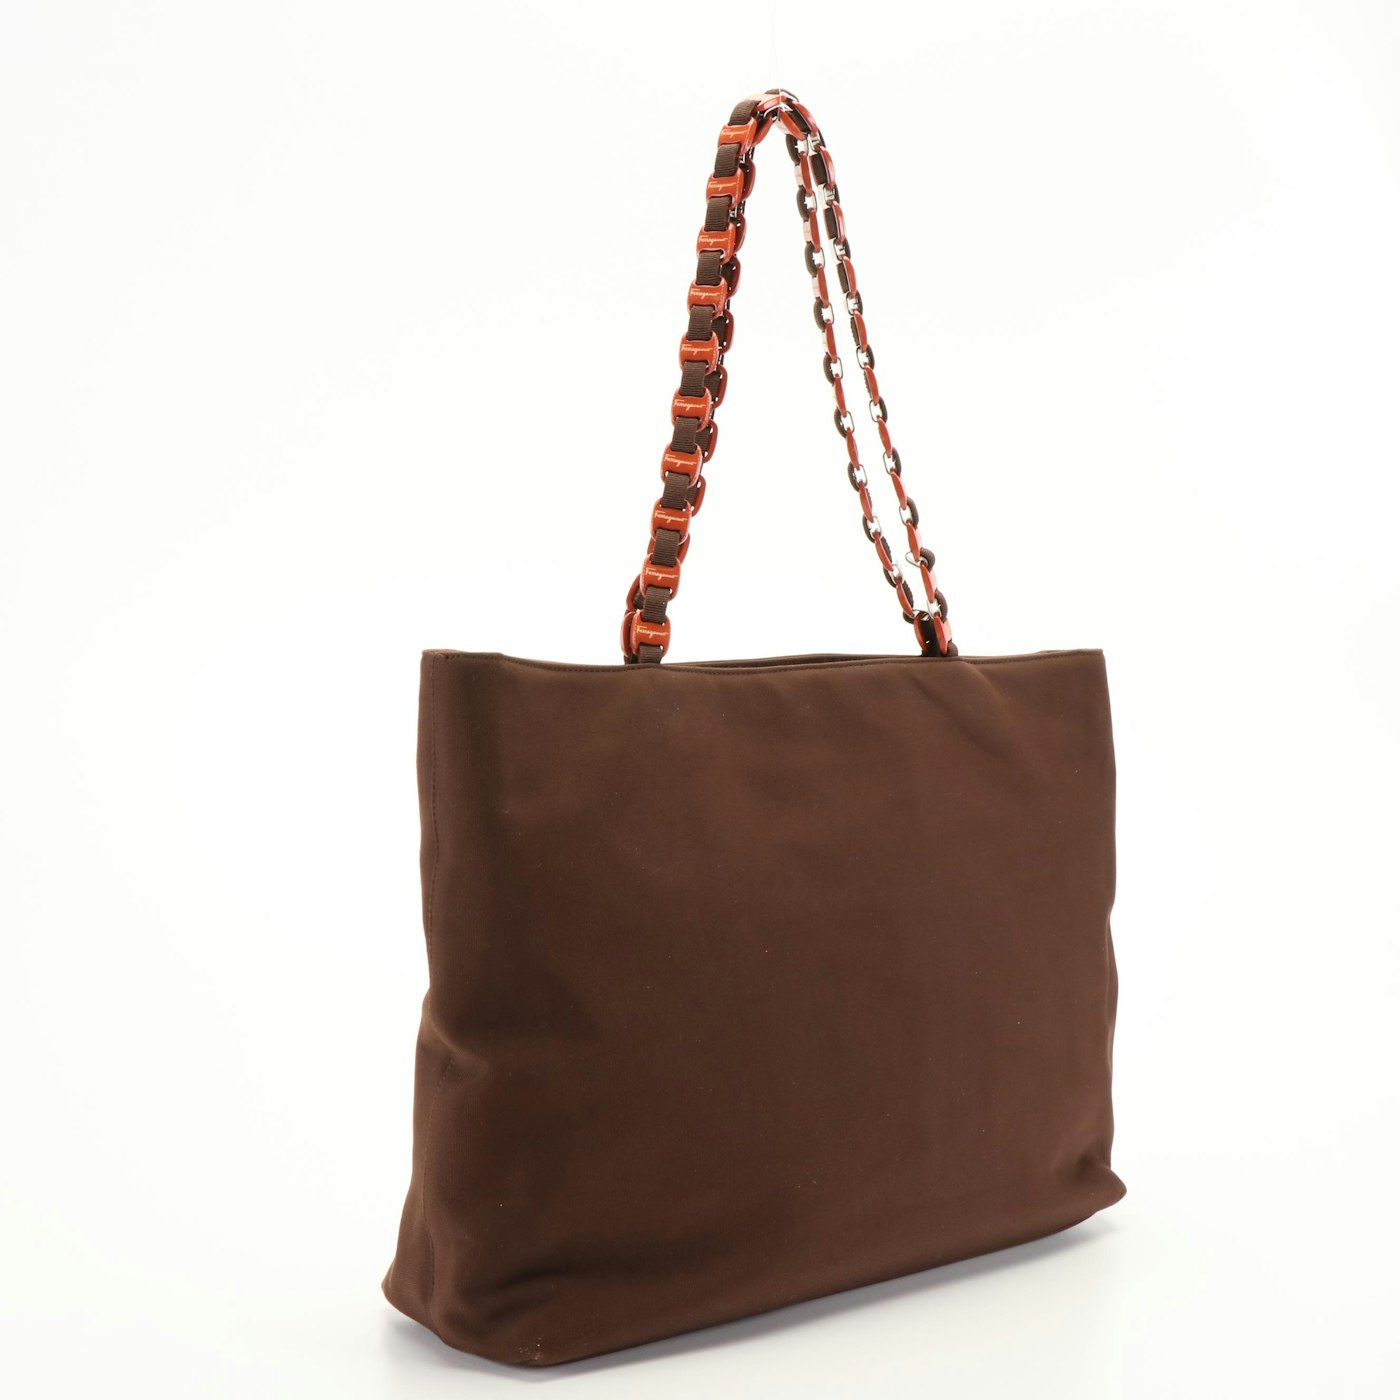 Salvatore Ferragamo Chain Link Shoulder Bag in Brown Canvas | EBTH